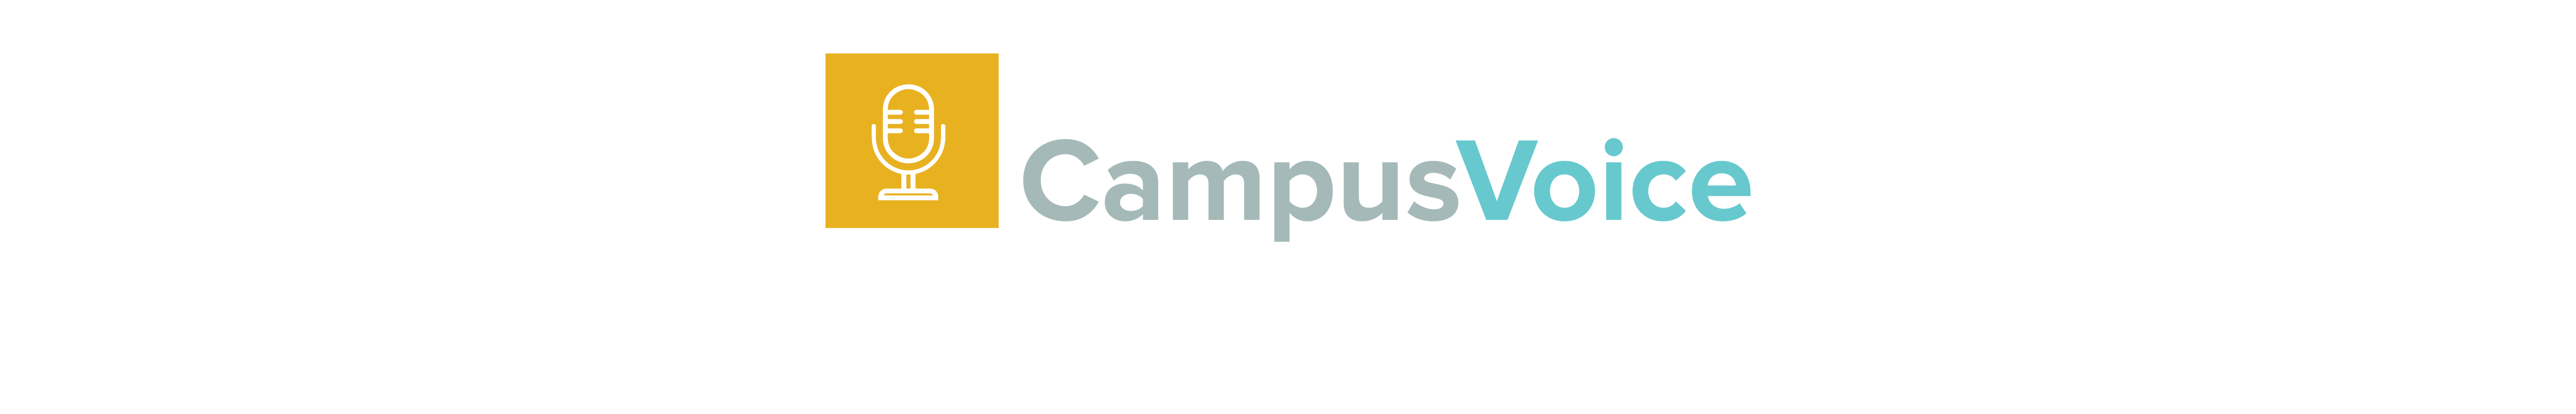 LifeWest Campus Voice